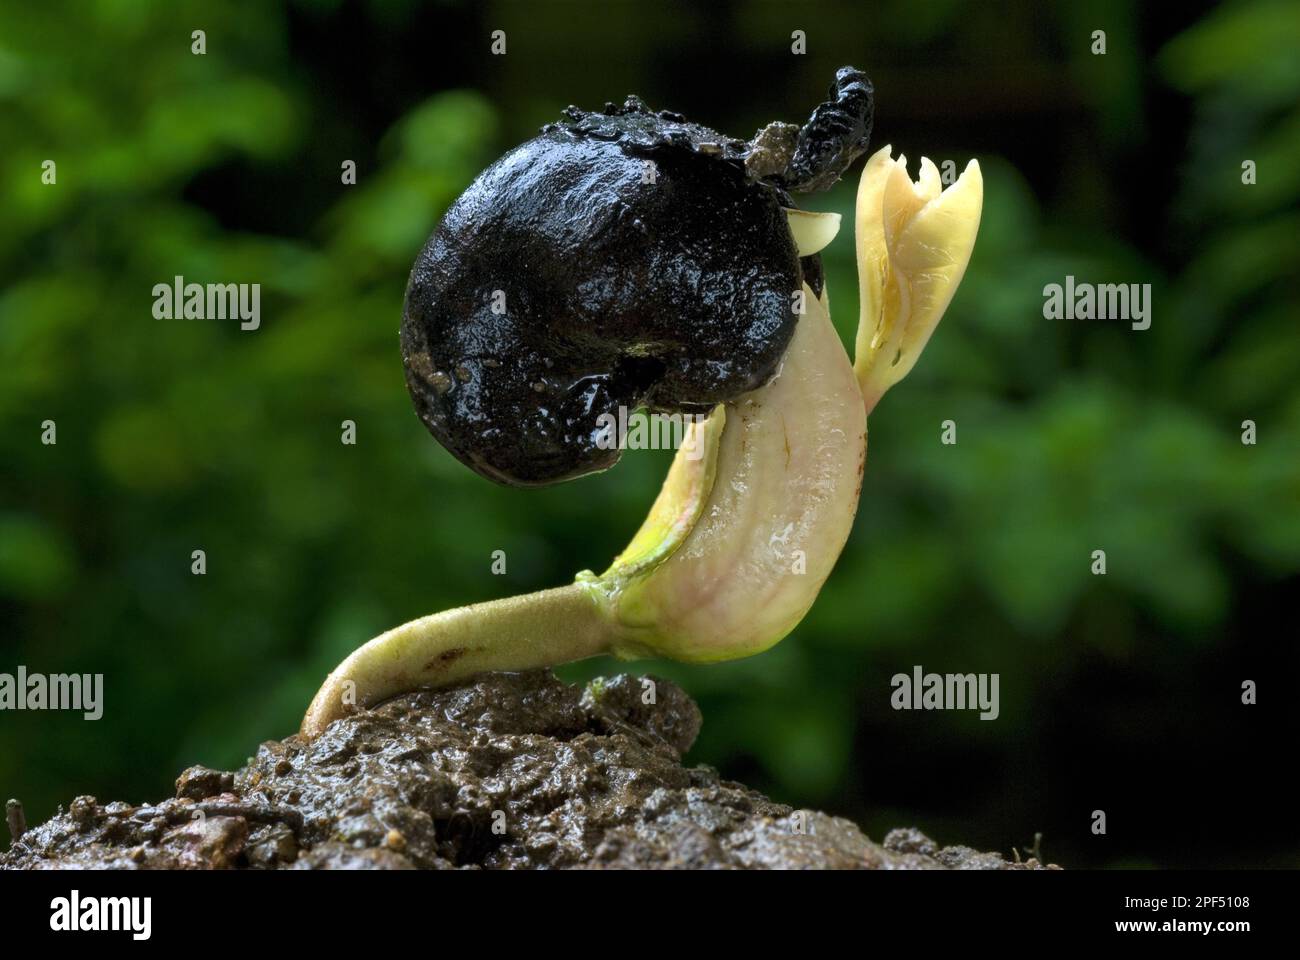 Cashew (Anacardium occidentale) germinating seed with shoot, during the rainy season, Trivandrum, Kerala, India Stock Photo